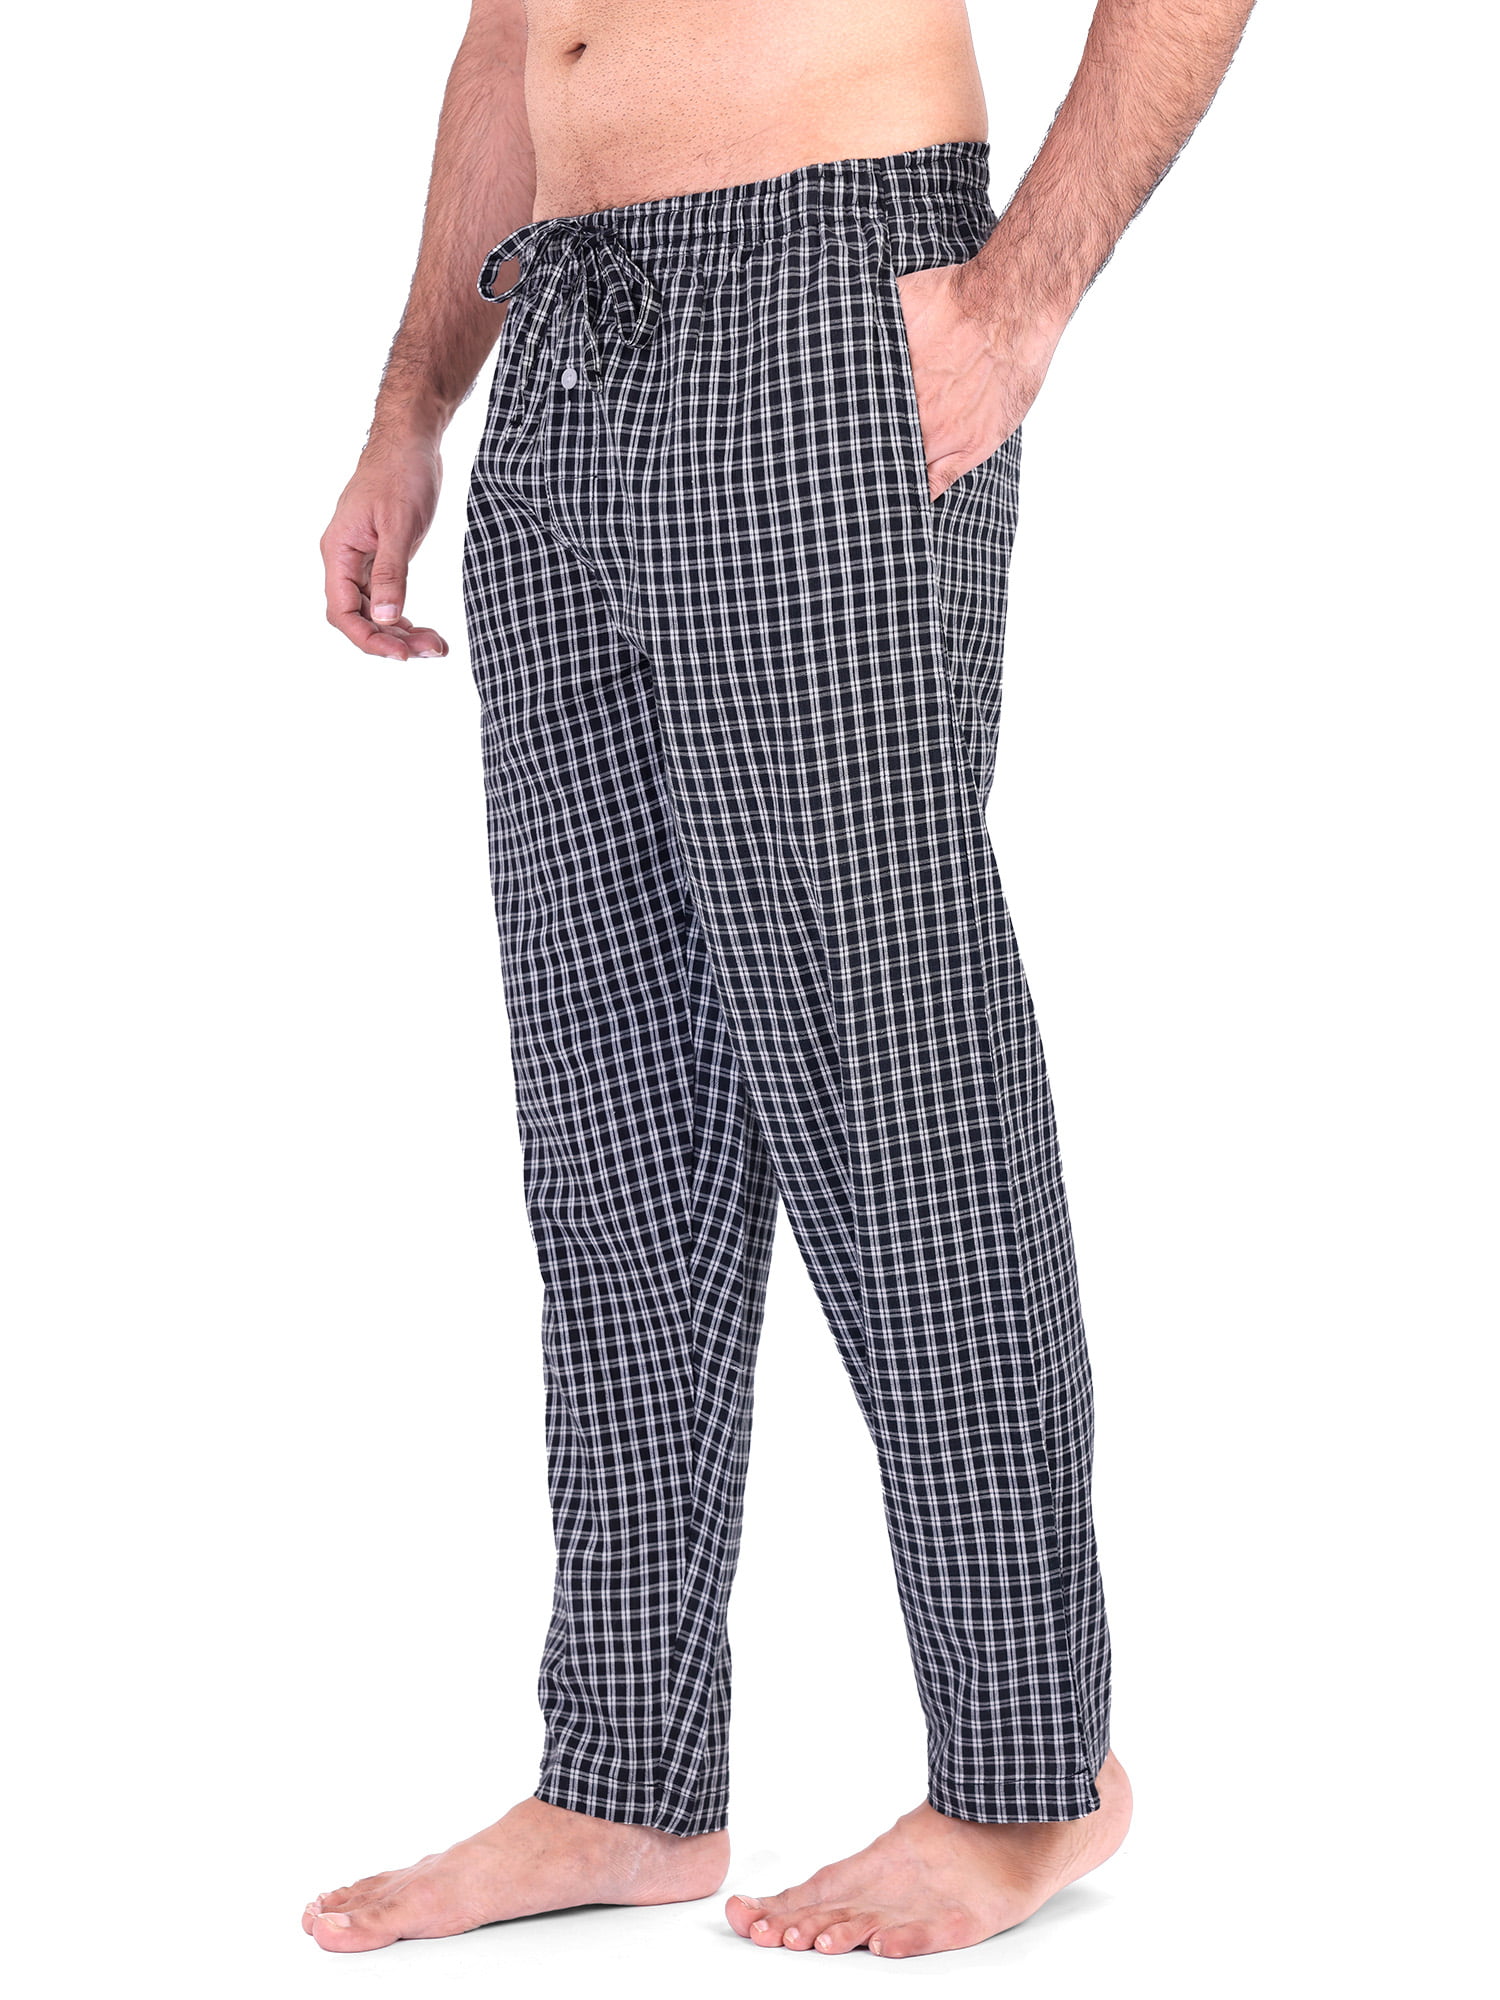 Womens Track Pant Lower Cotton Printed Pyjama/Lounge Wear –Supersoft Cotton  Night Wear/Pyjama for Women(